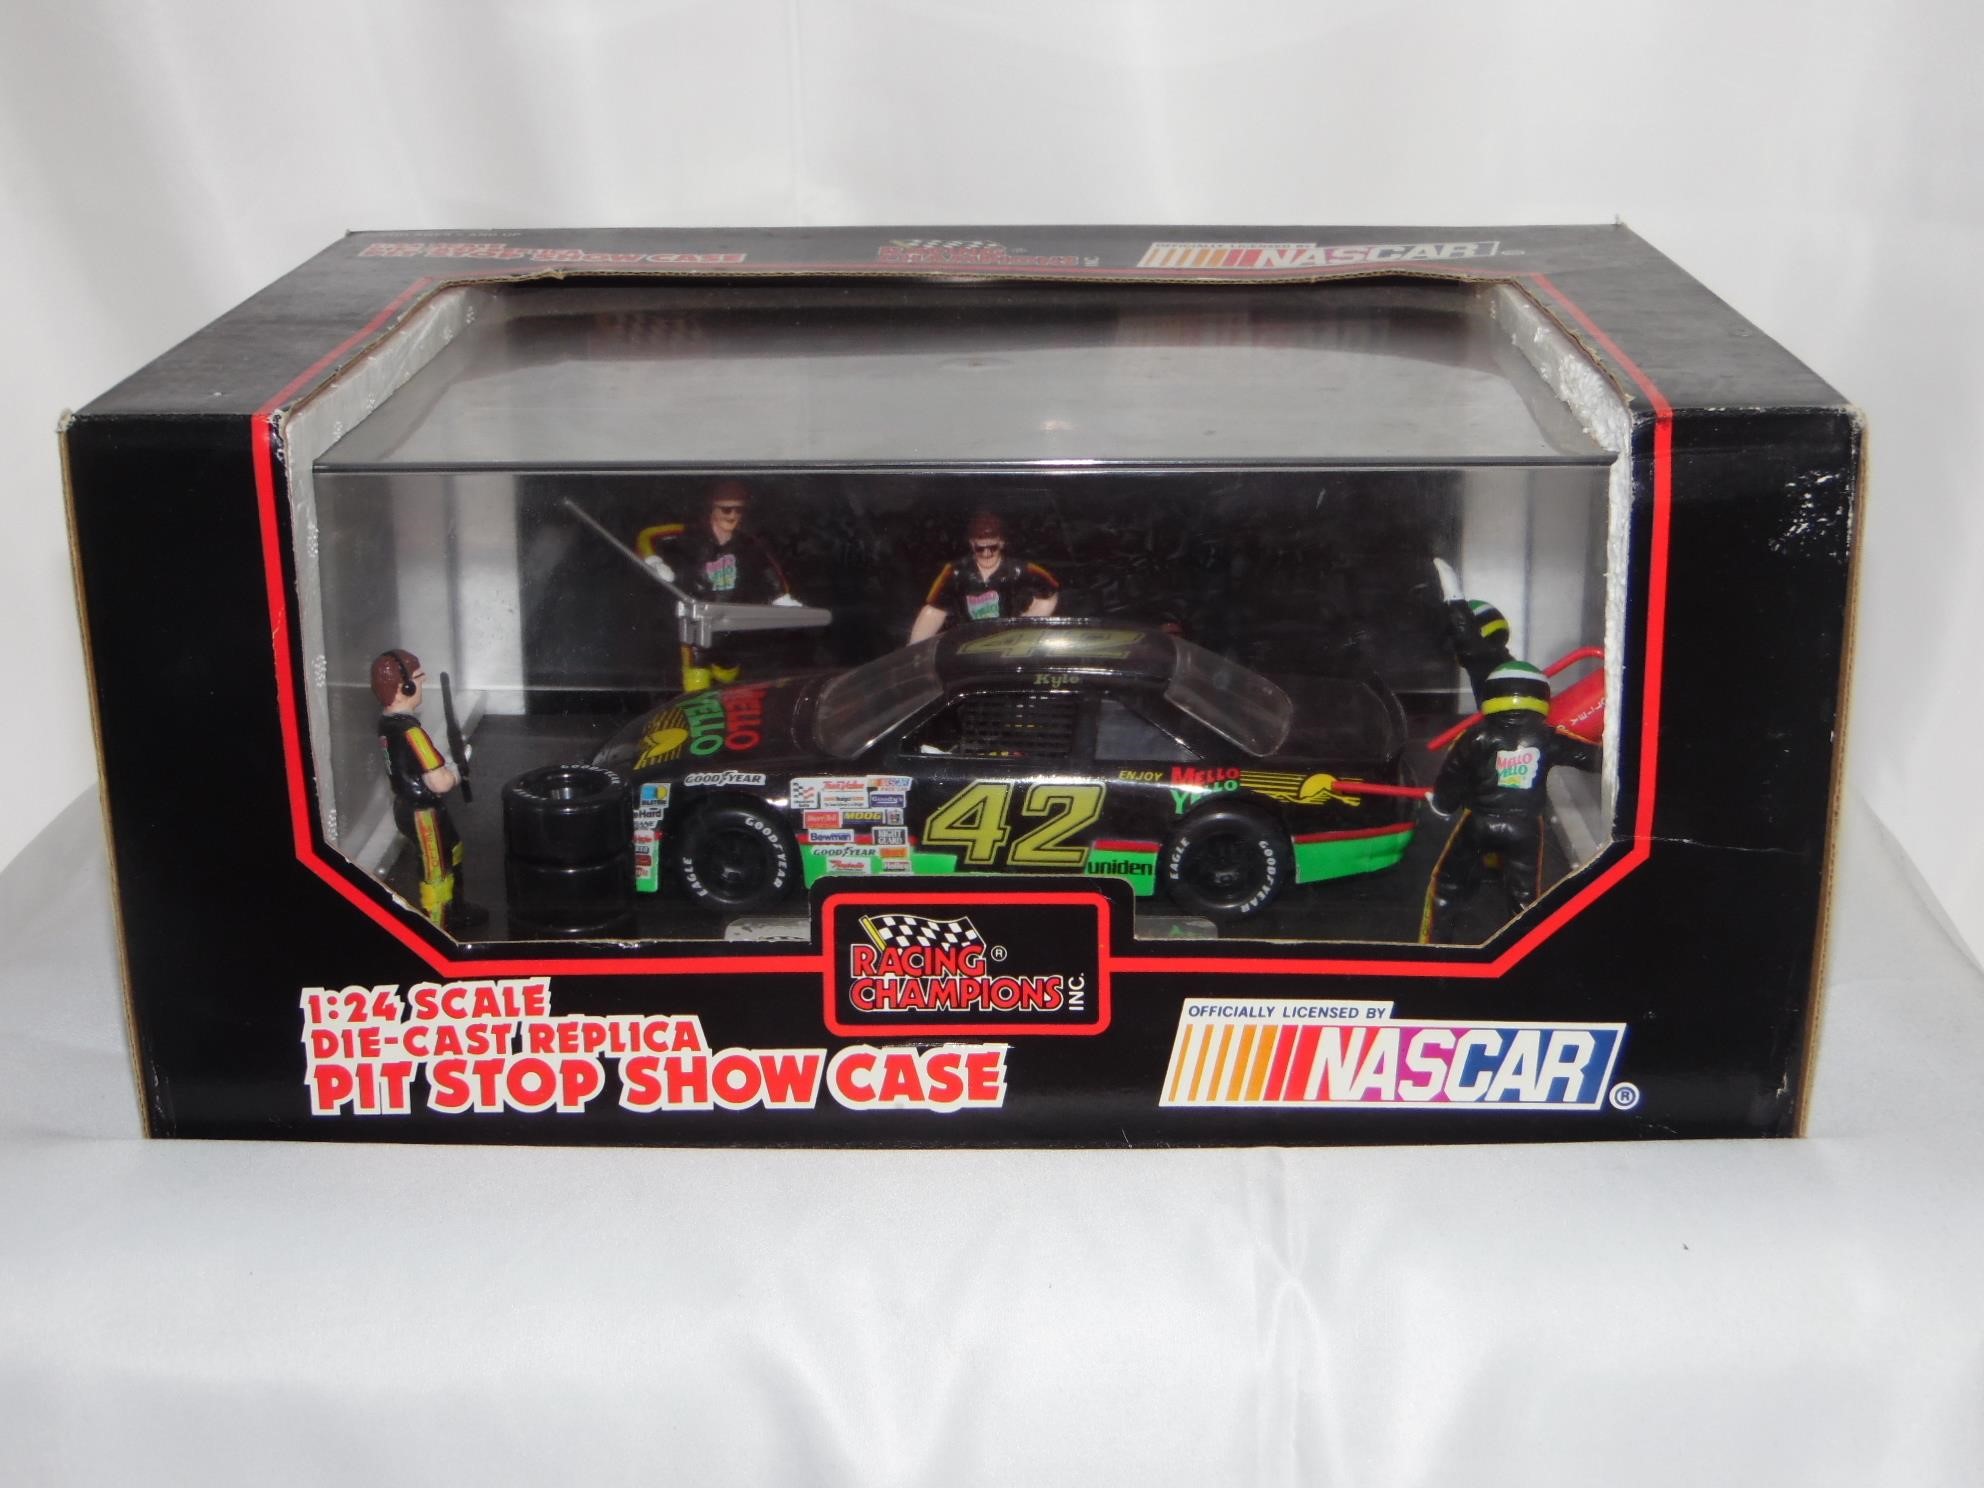 NASCAR and NHRA Memorabilia Auction